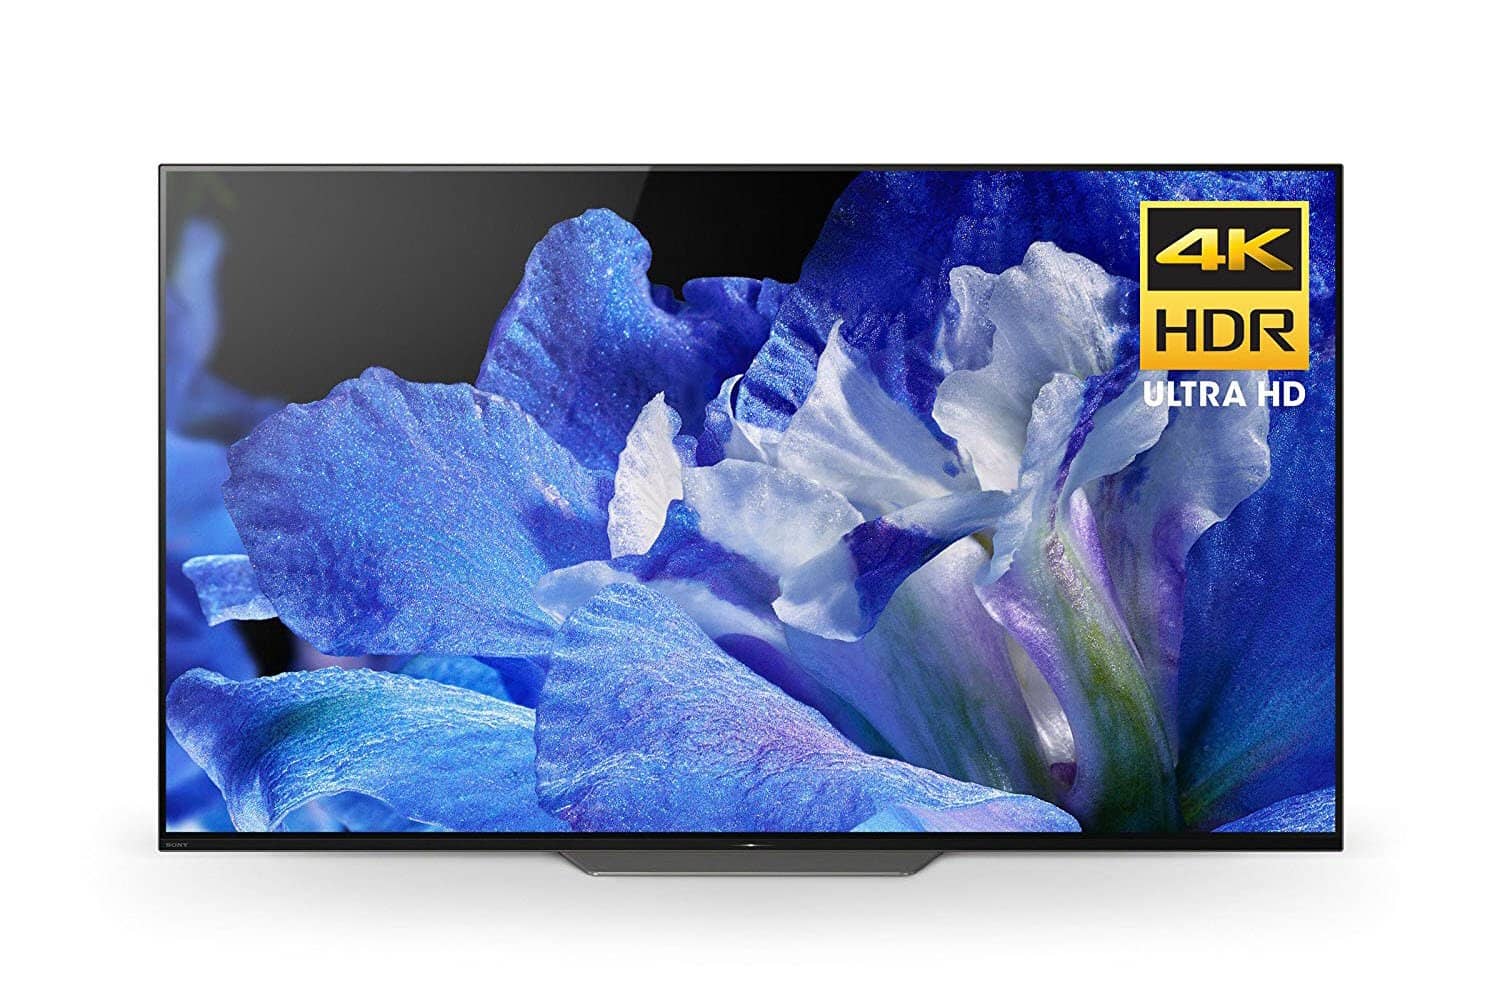 Sony XBR65A8F 65-Inch 4K Ultra HD Smart BRAVIA OLED TV (2018 Model)